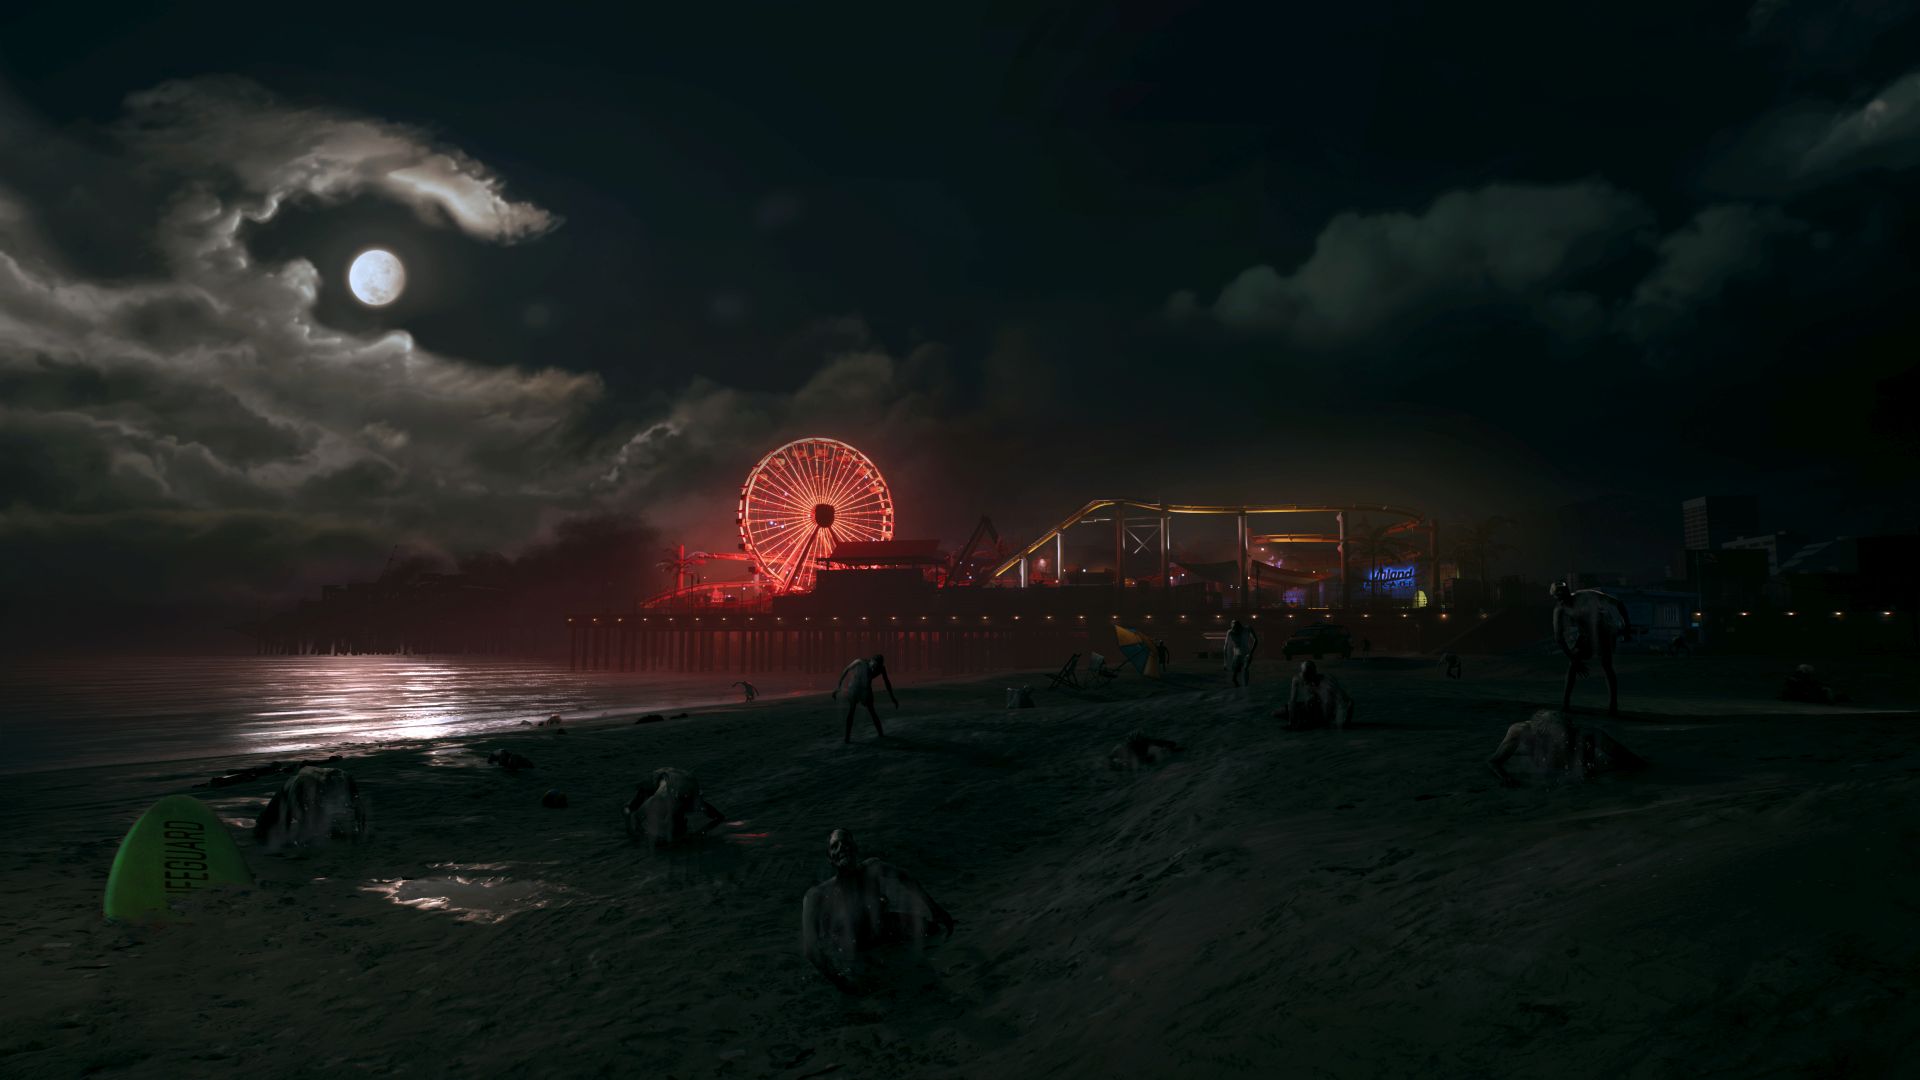 Dead Island 2 Promises the Zombie Apocalypse of Your Dreams - Xbox Wire